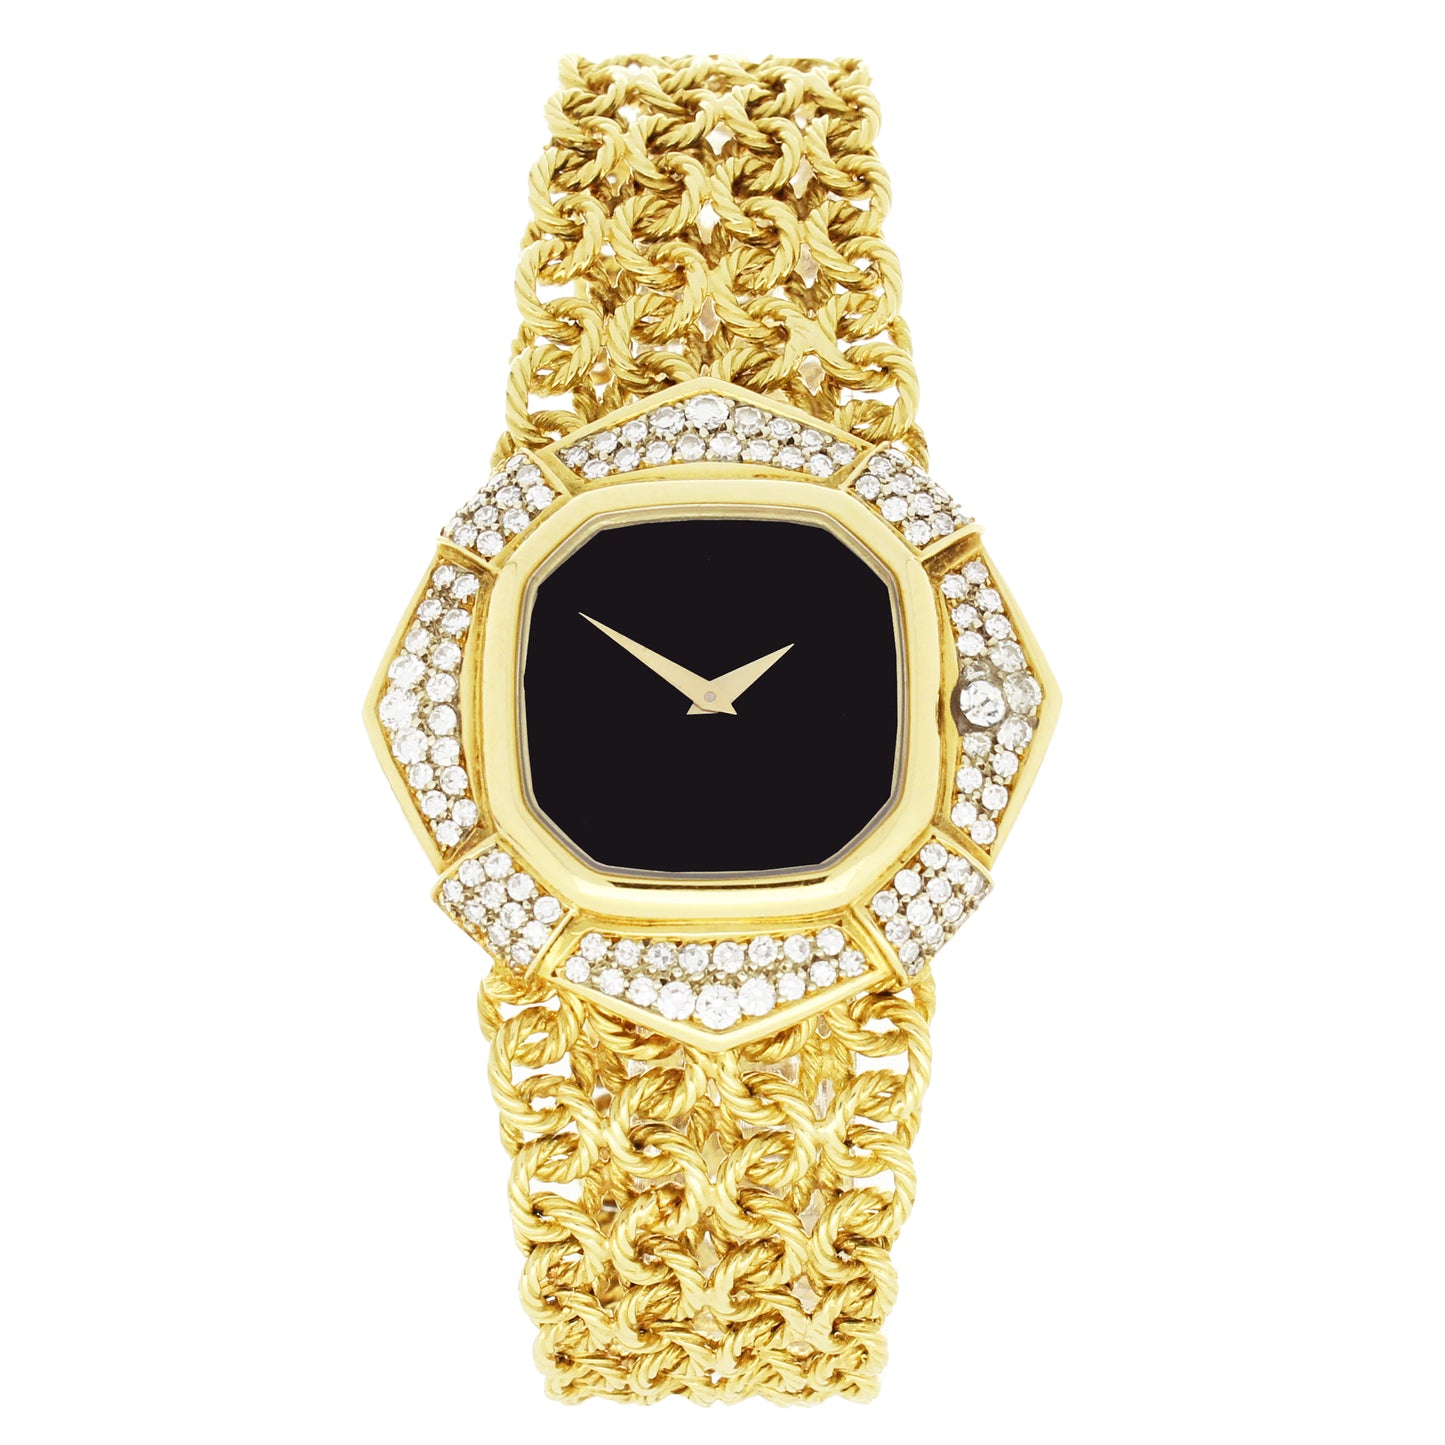 18ct yellow gold OMEGA diamond set bracelet watch. Made 1975